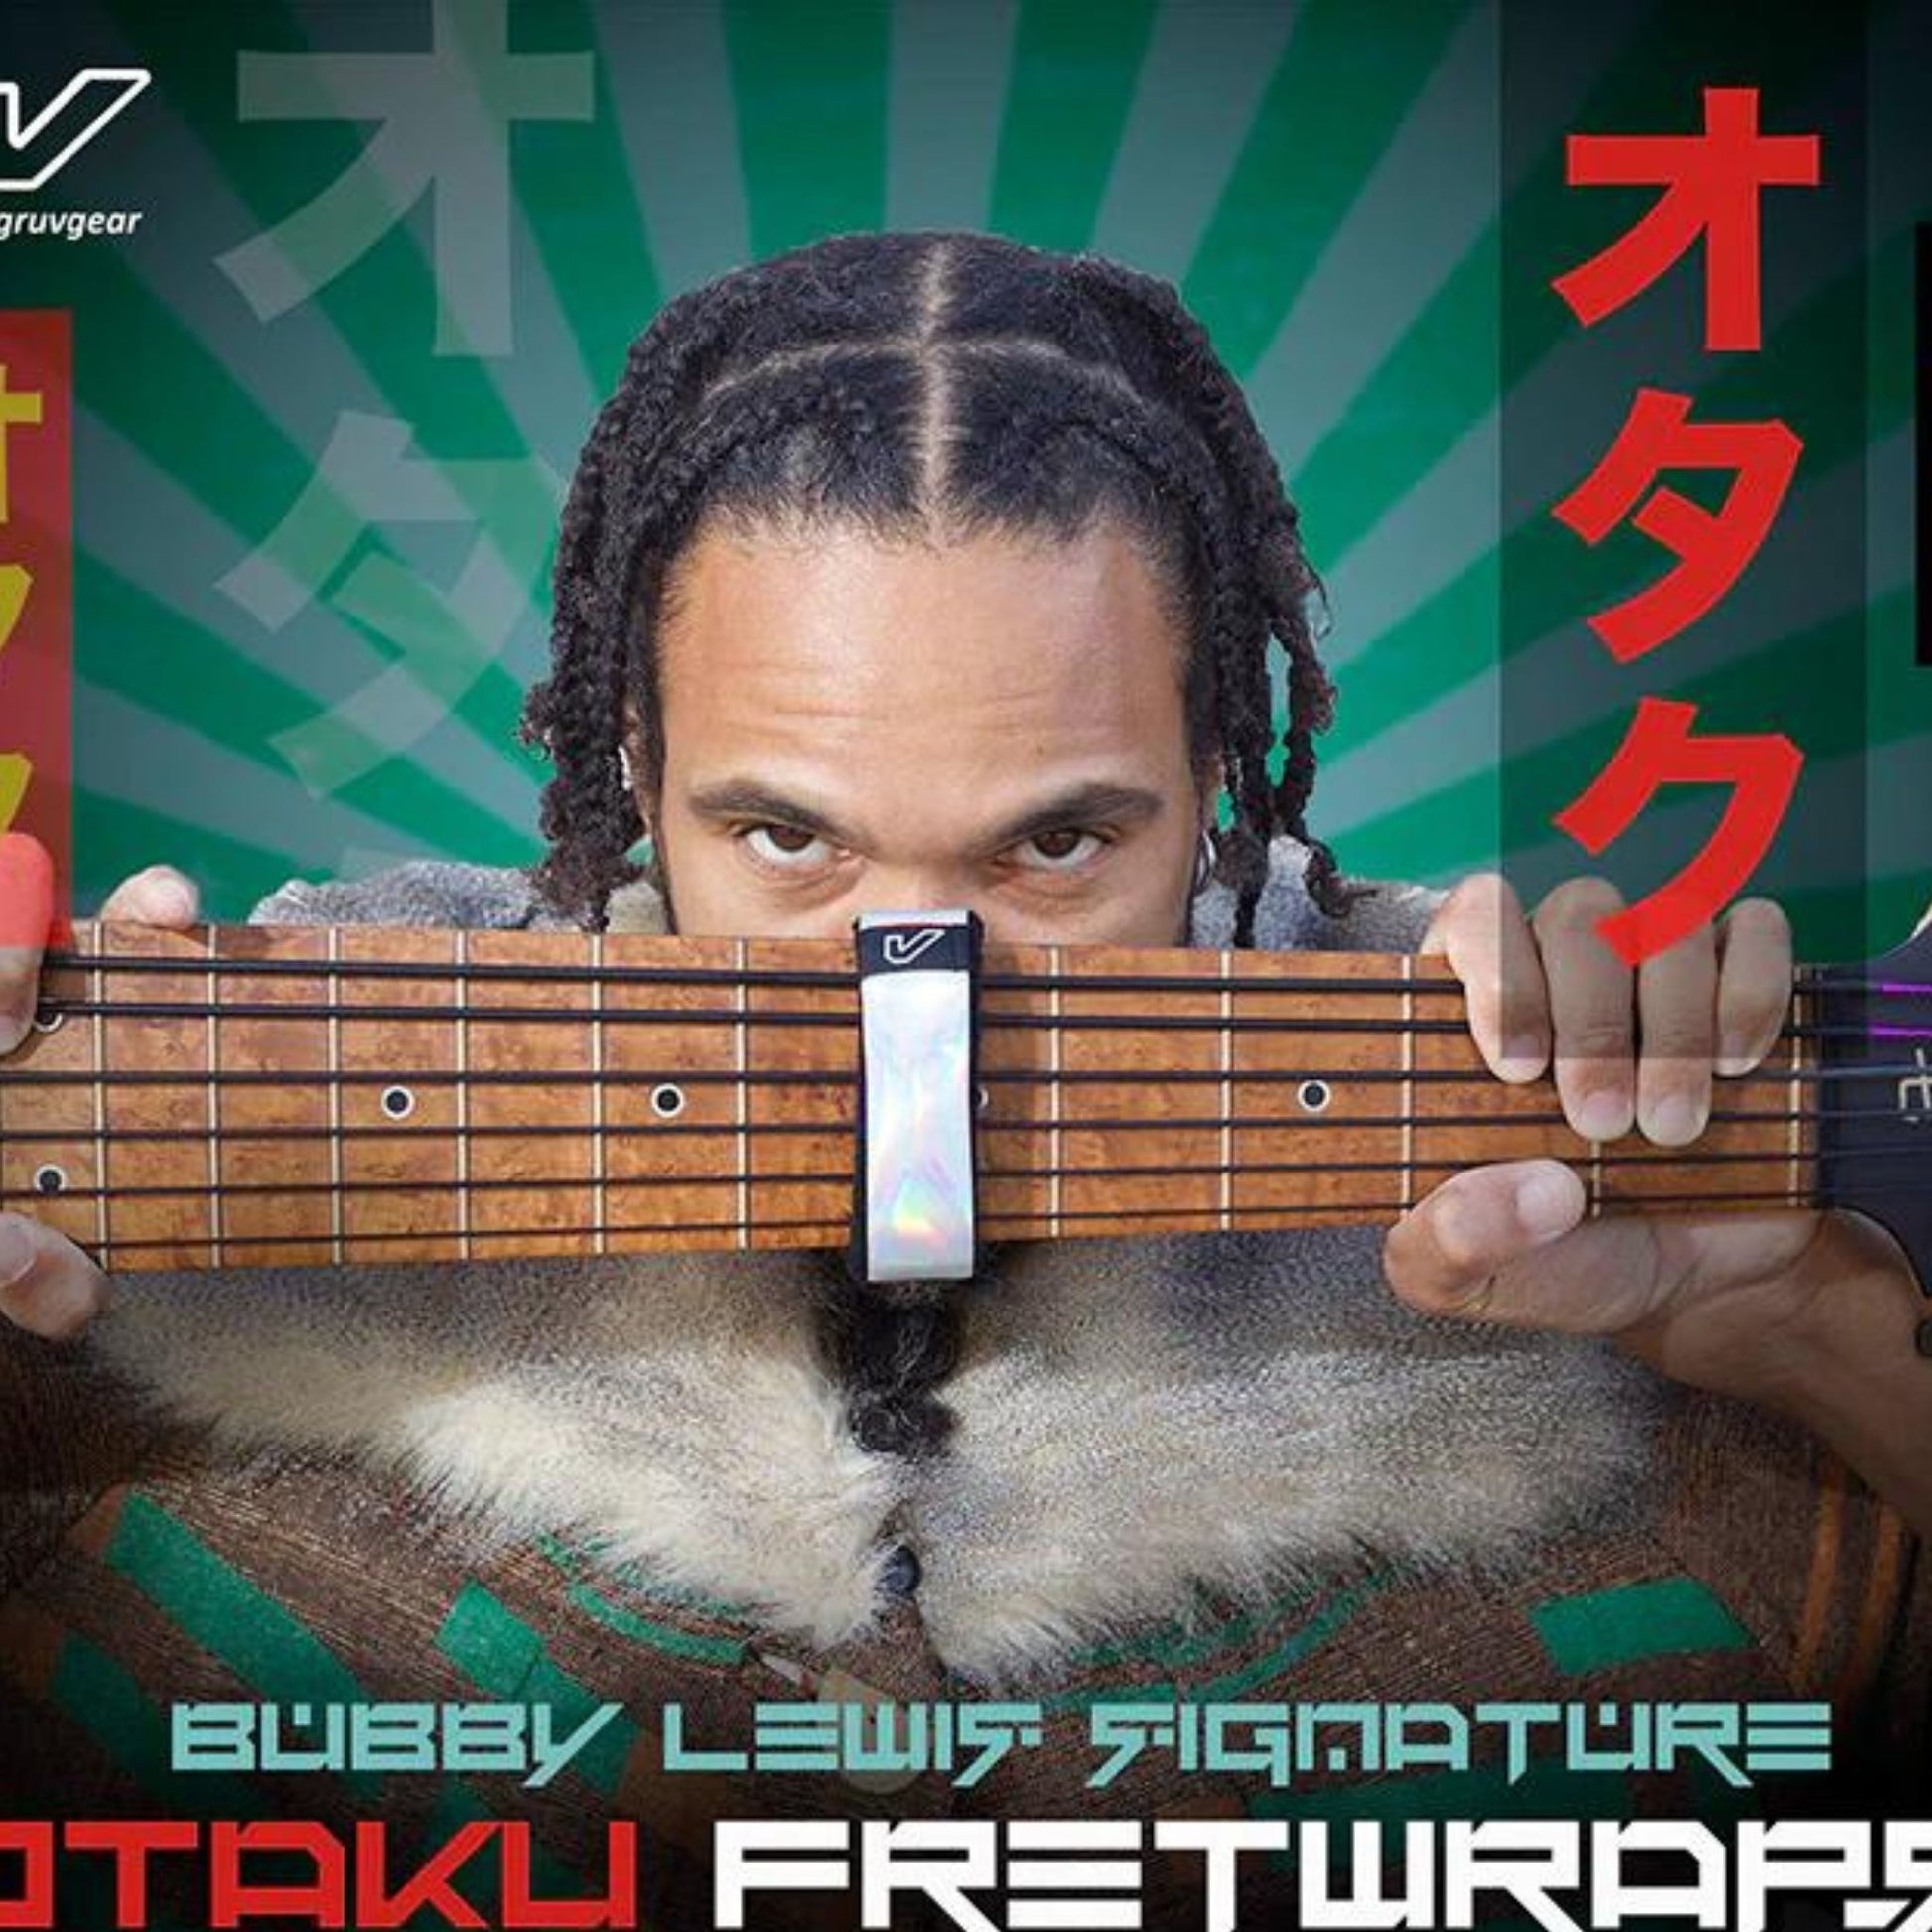 FretWraps Gruv Gear "Otaku" Bubby Lewis Signature - Việt Music